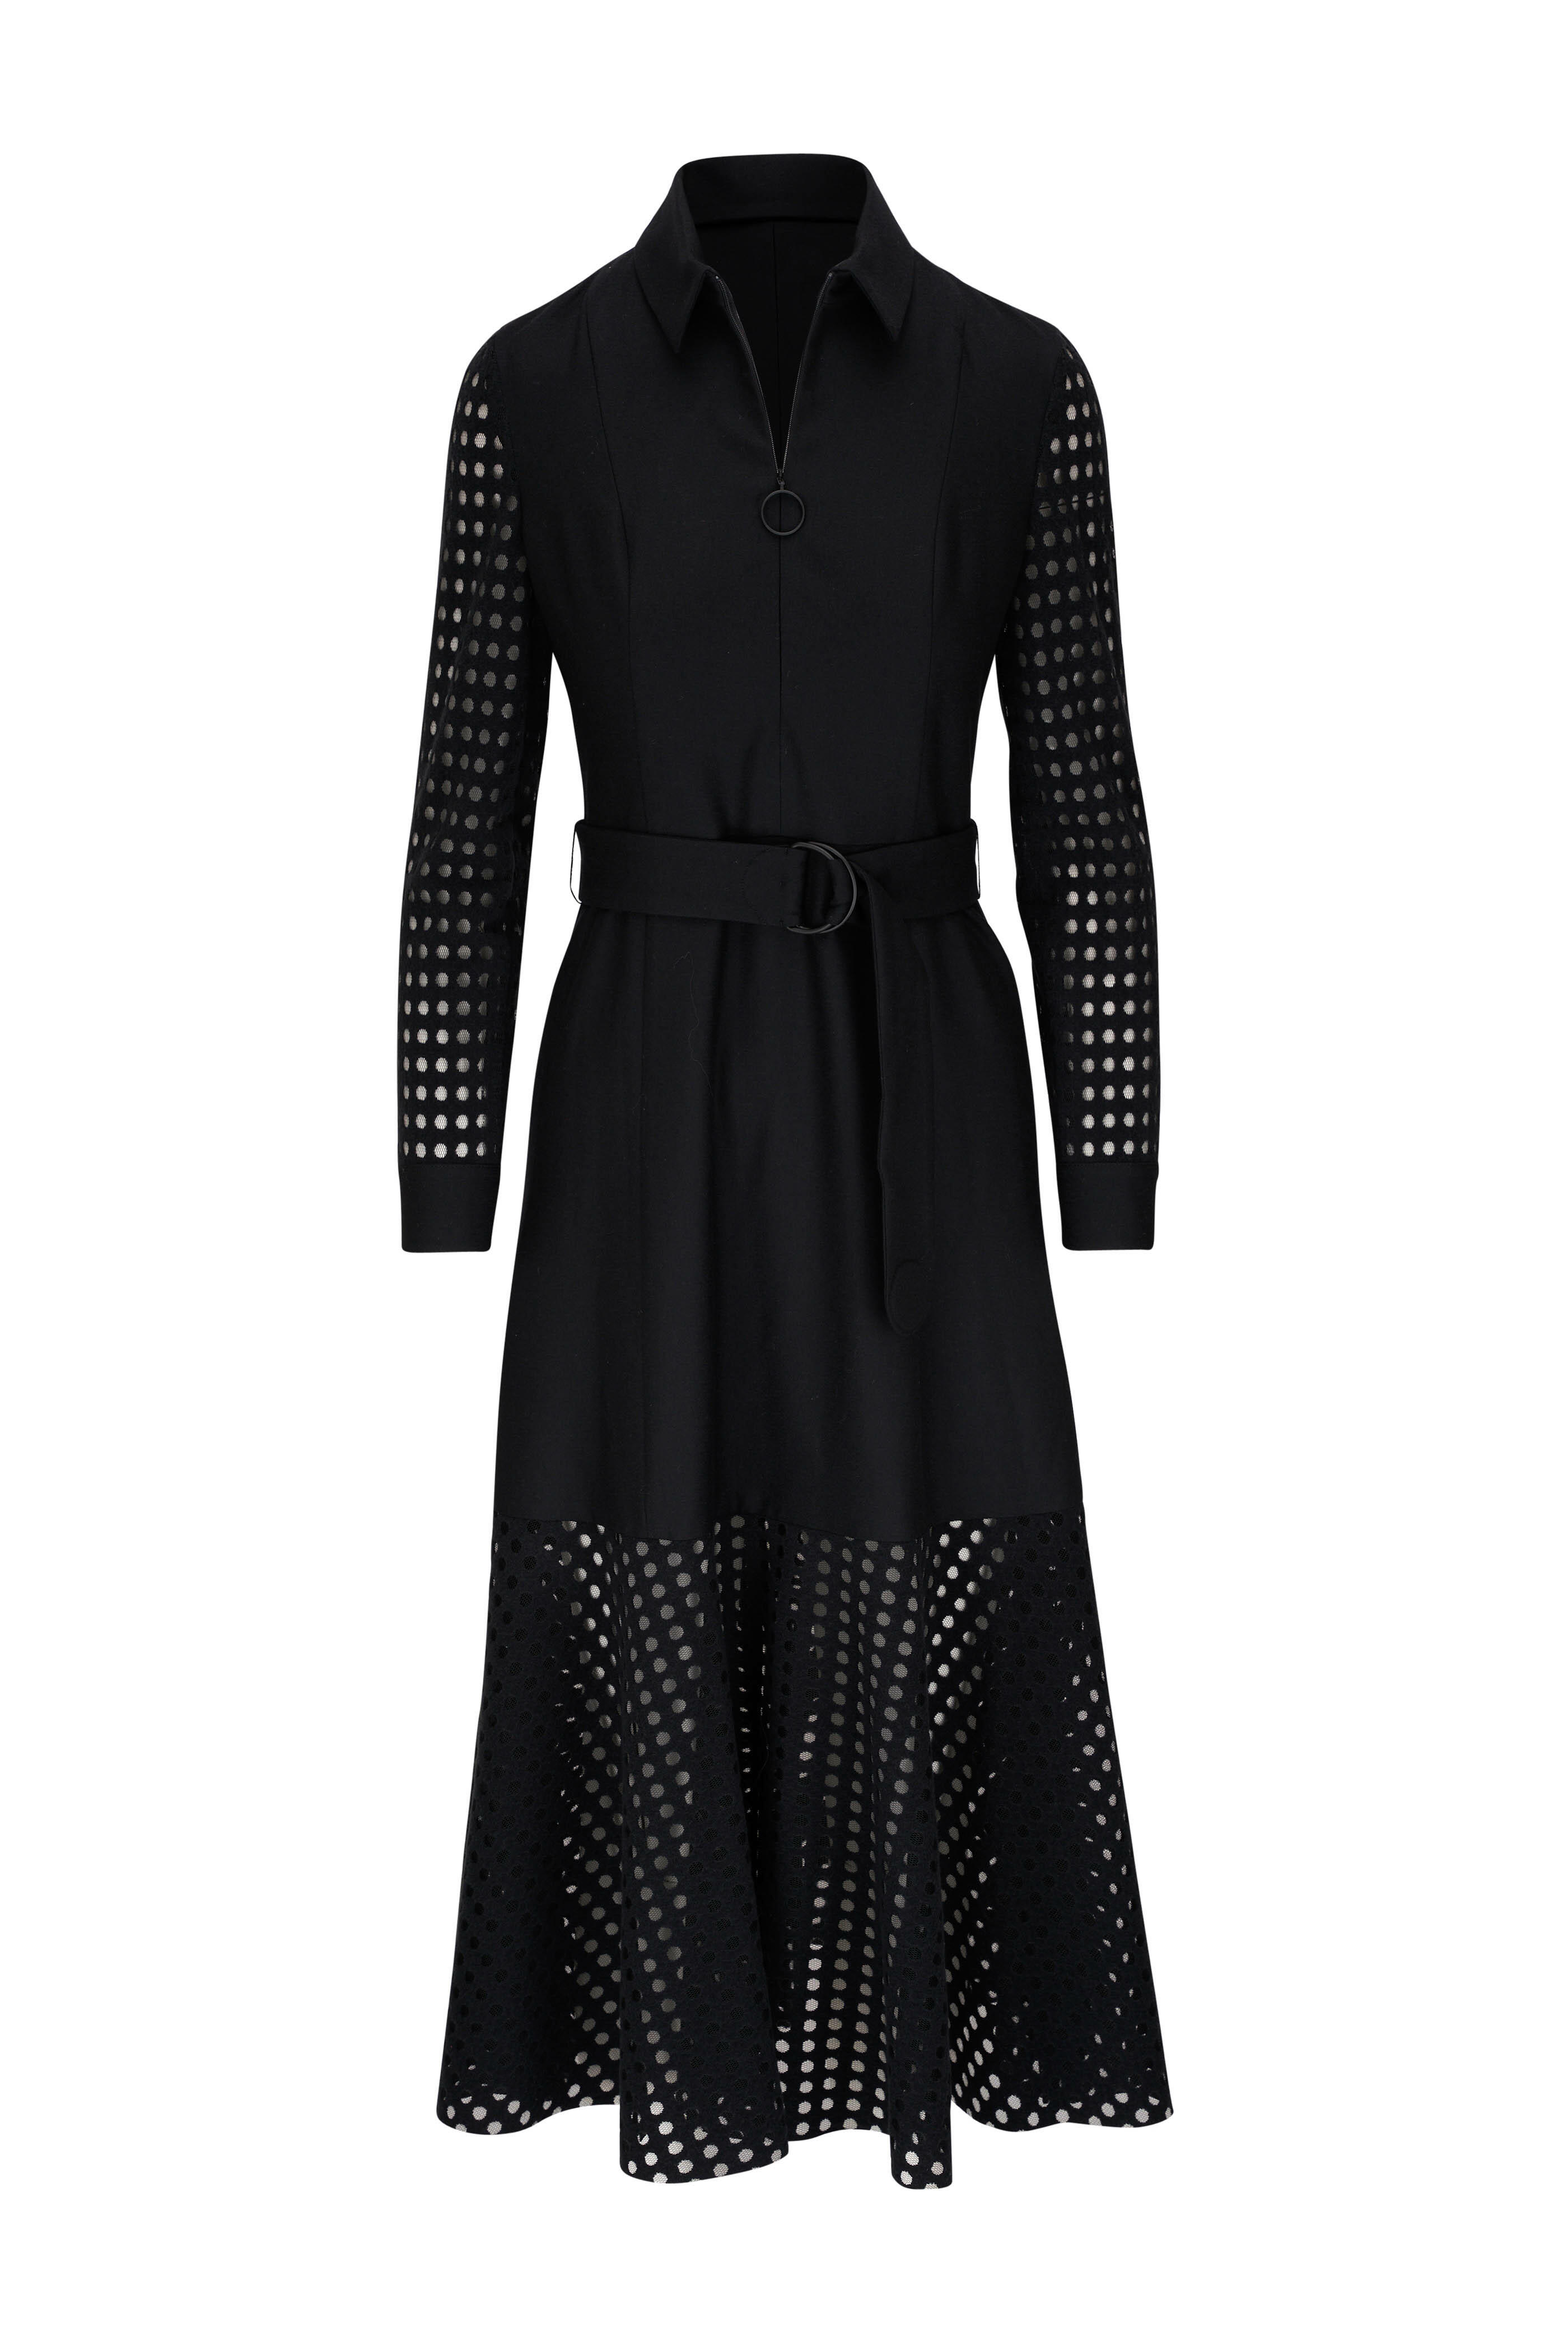 Akris Punto Elements Long Sleeve Fit & Flare Dress in Black